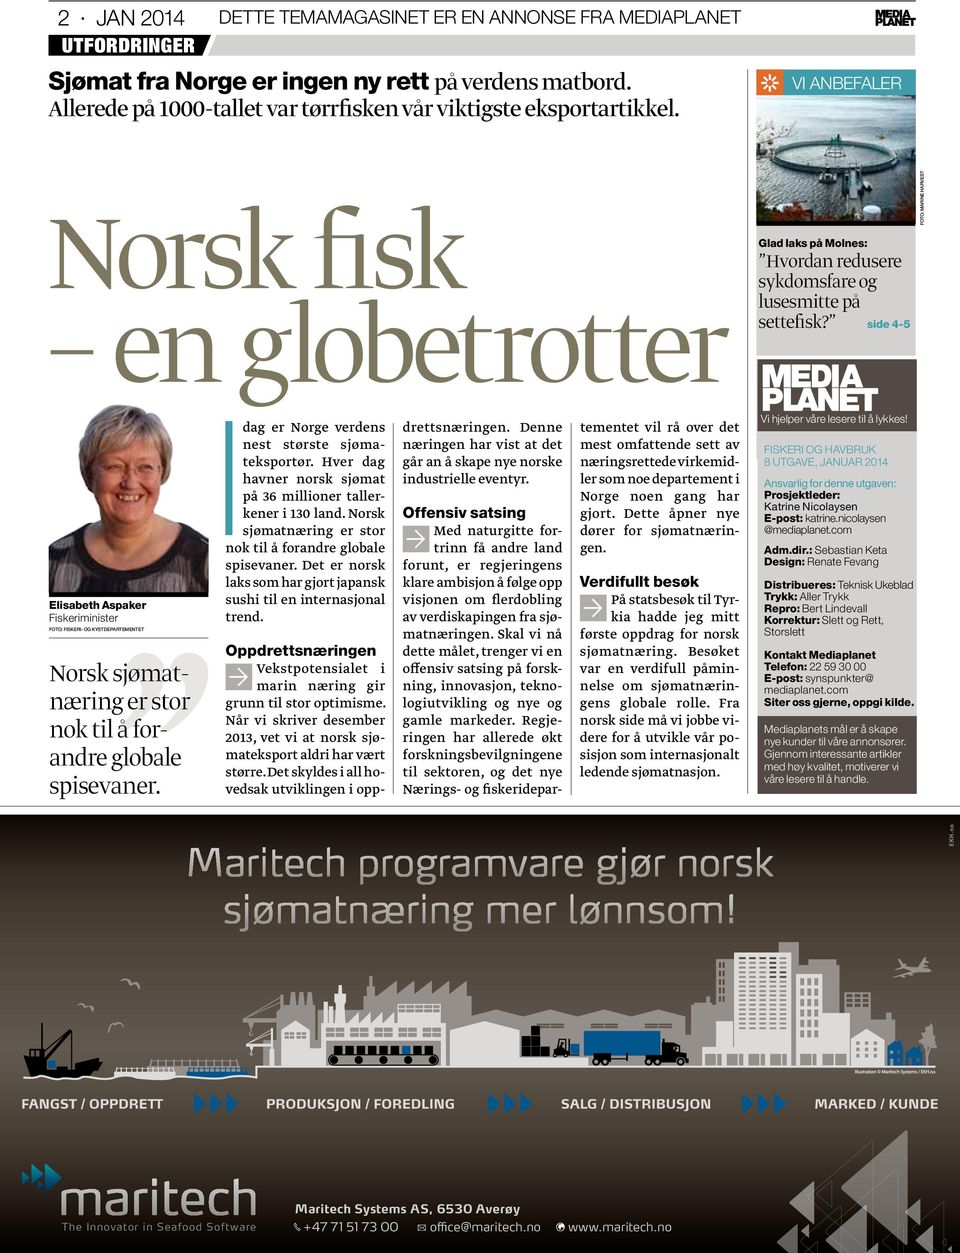 side 4-5 Foto: Marine Harvest Elisabeth Aspaker Fiskeriminister Foto: Fiskeri- og Kystdepartementet Norsk sjømatnæring er stor nok til å forandre globale spisevaner.